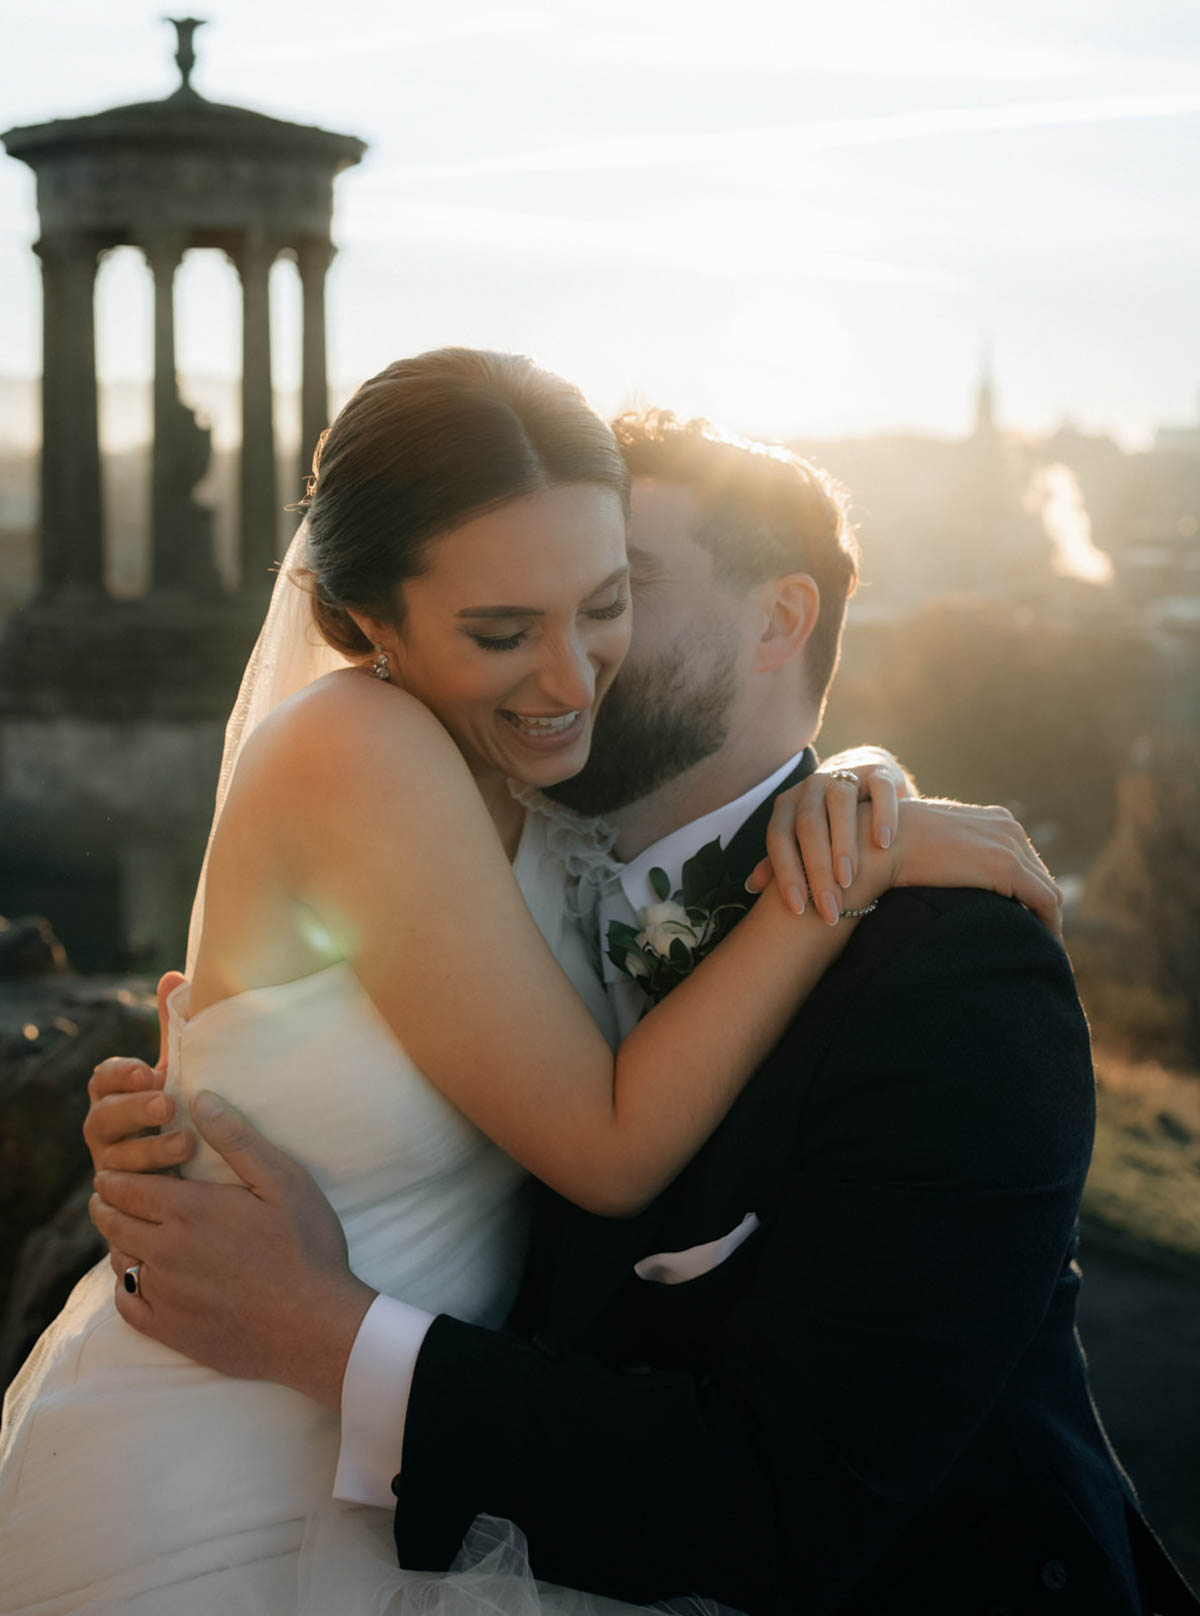 An Elegant Takeover in Edinburgh at this $40,000 Winter Wedding